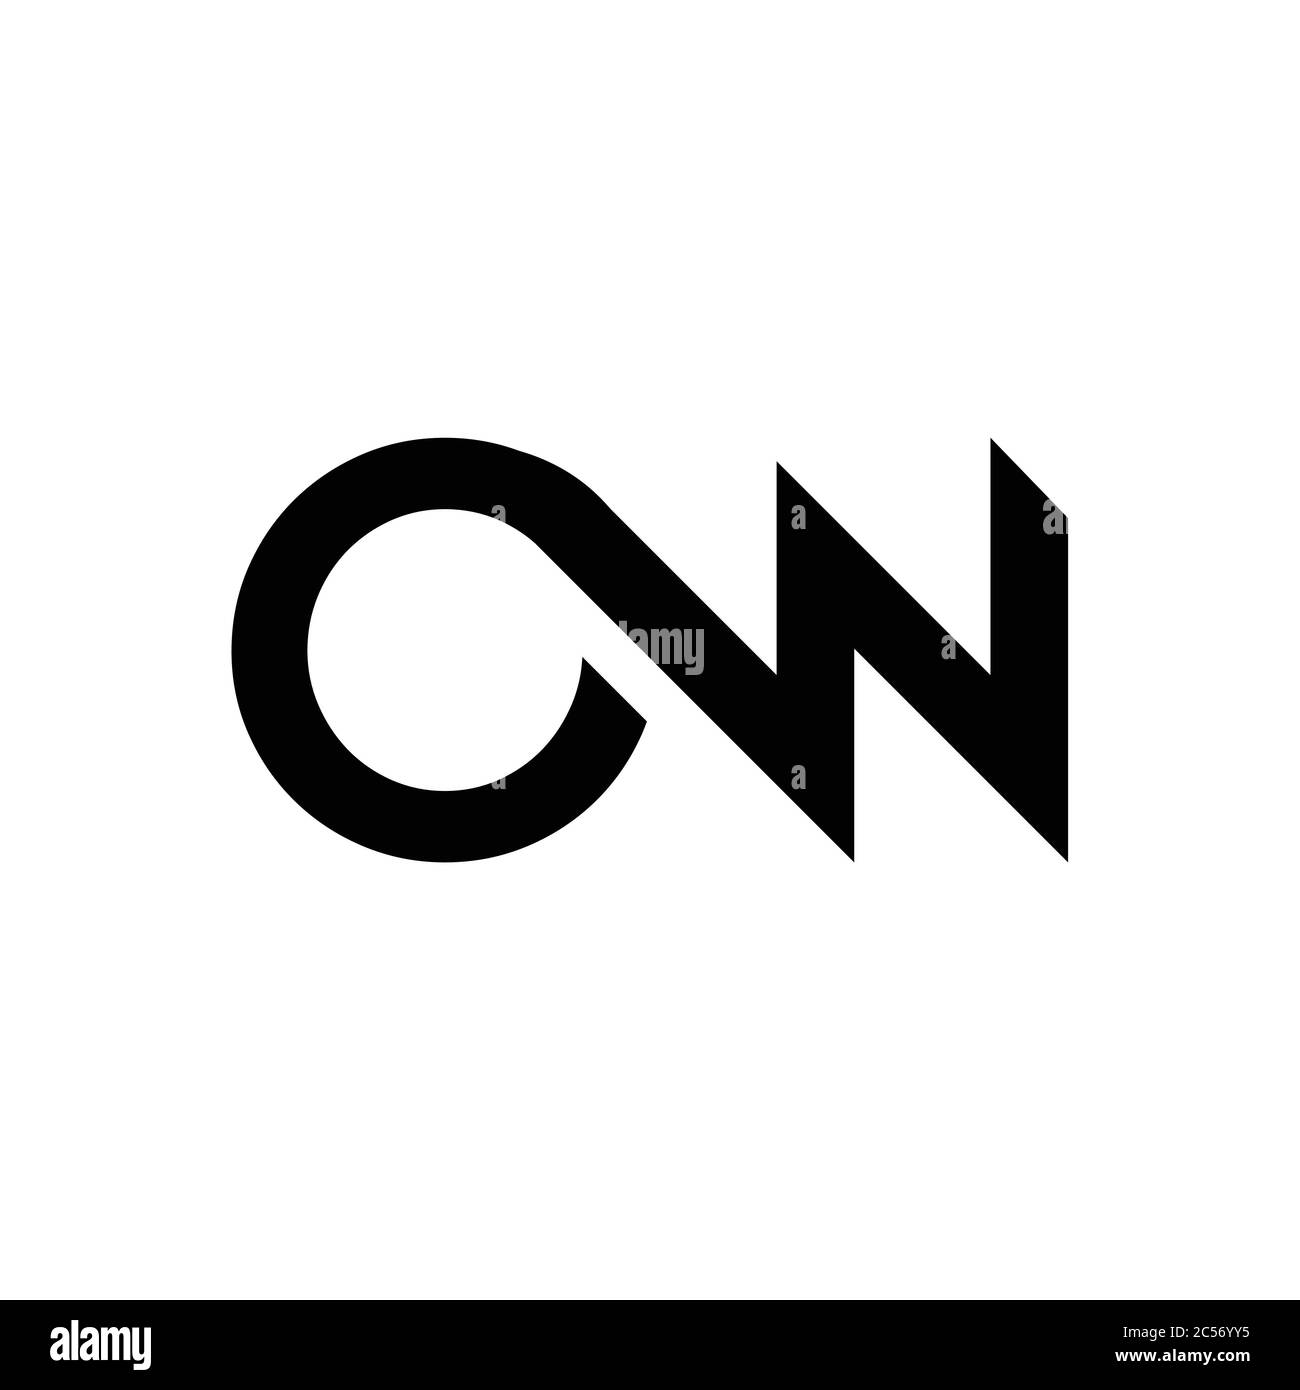 Ow Logo Stock Illustrations – 766 Ow Logo Stock Illustrations, Vectors &  Clipart - Dreamstime